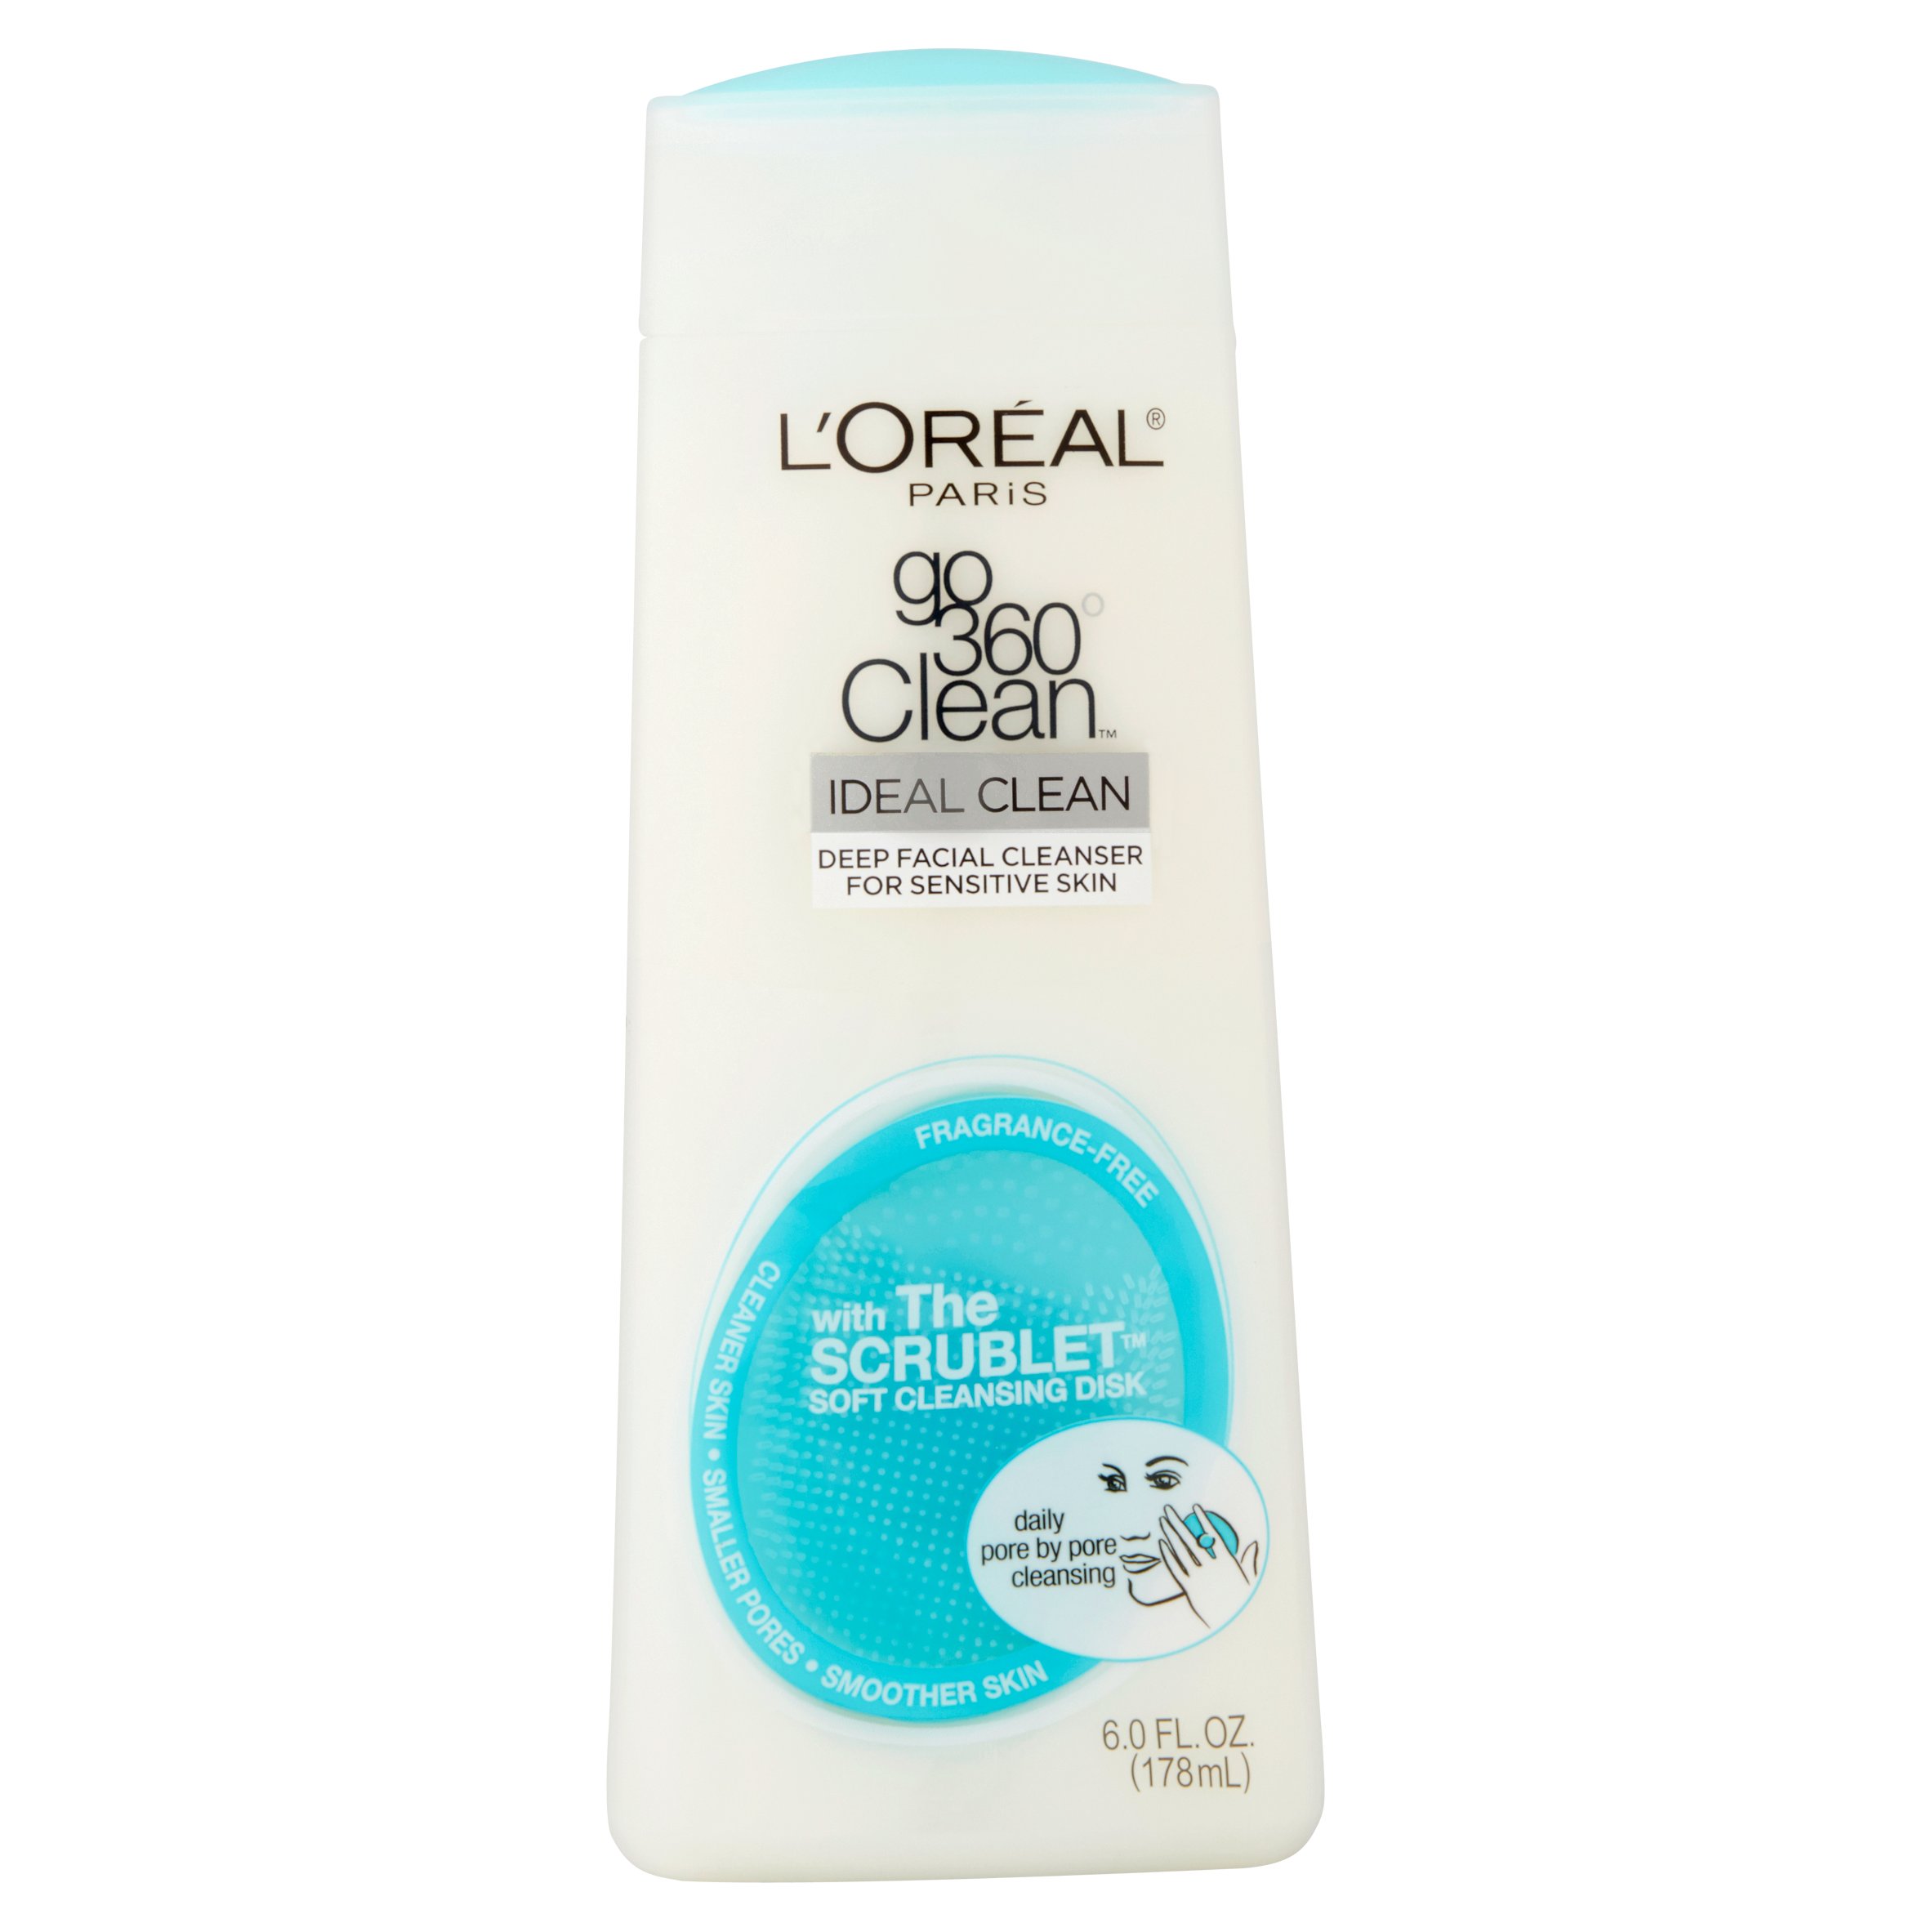 L'Oreal Paris Go 360 Clean Ideal Clean Deep Facial Cleanser, 6.0 Fl Oz - image 1 of 6